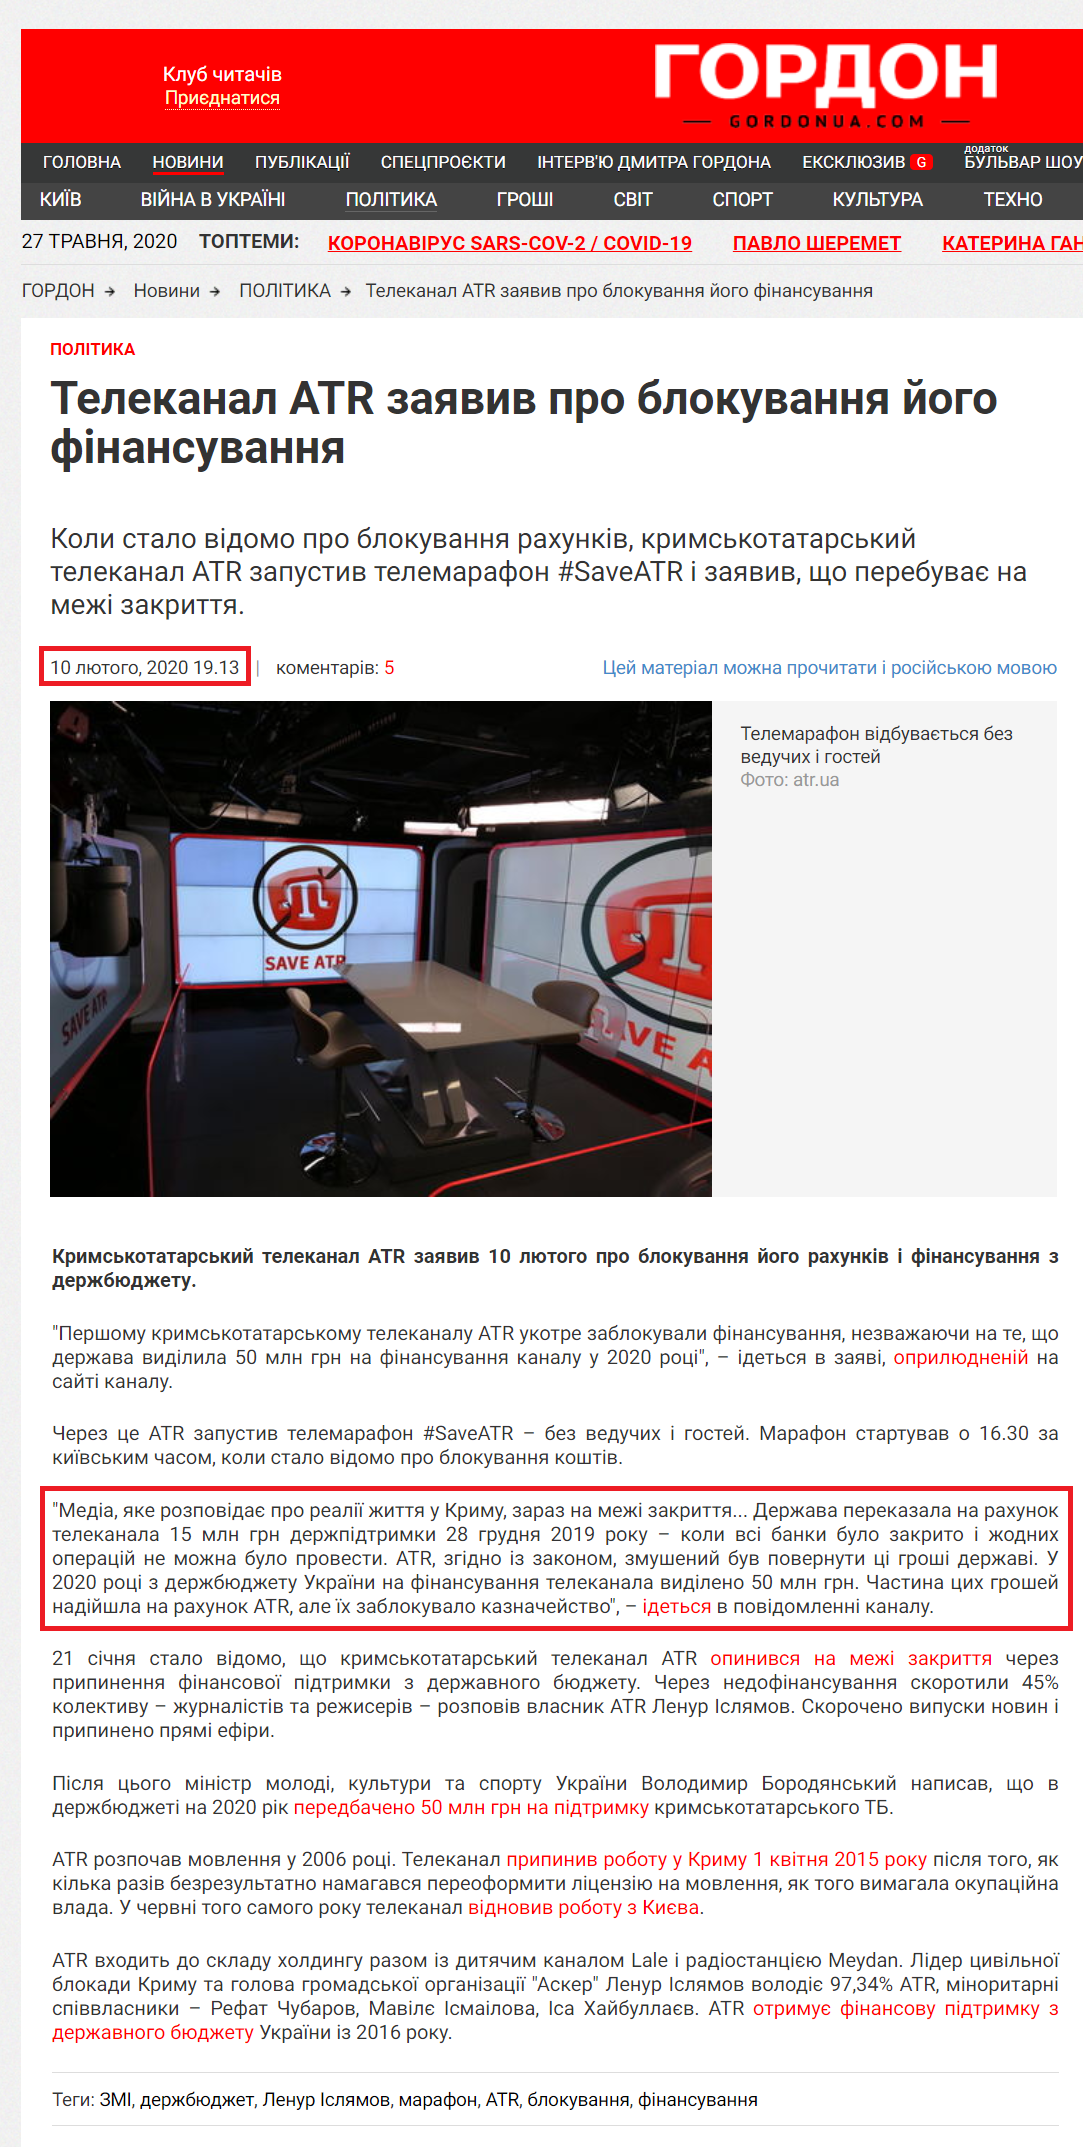 https://gordonua.com/ukr/news/politics/-telekanal-atr-zajaviv-pro-blokuvannja-jogo-finansuvannja-1486372.html